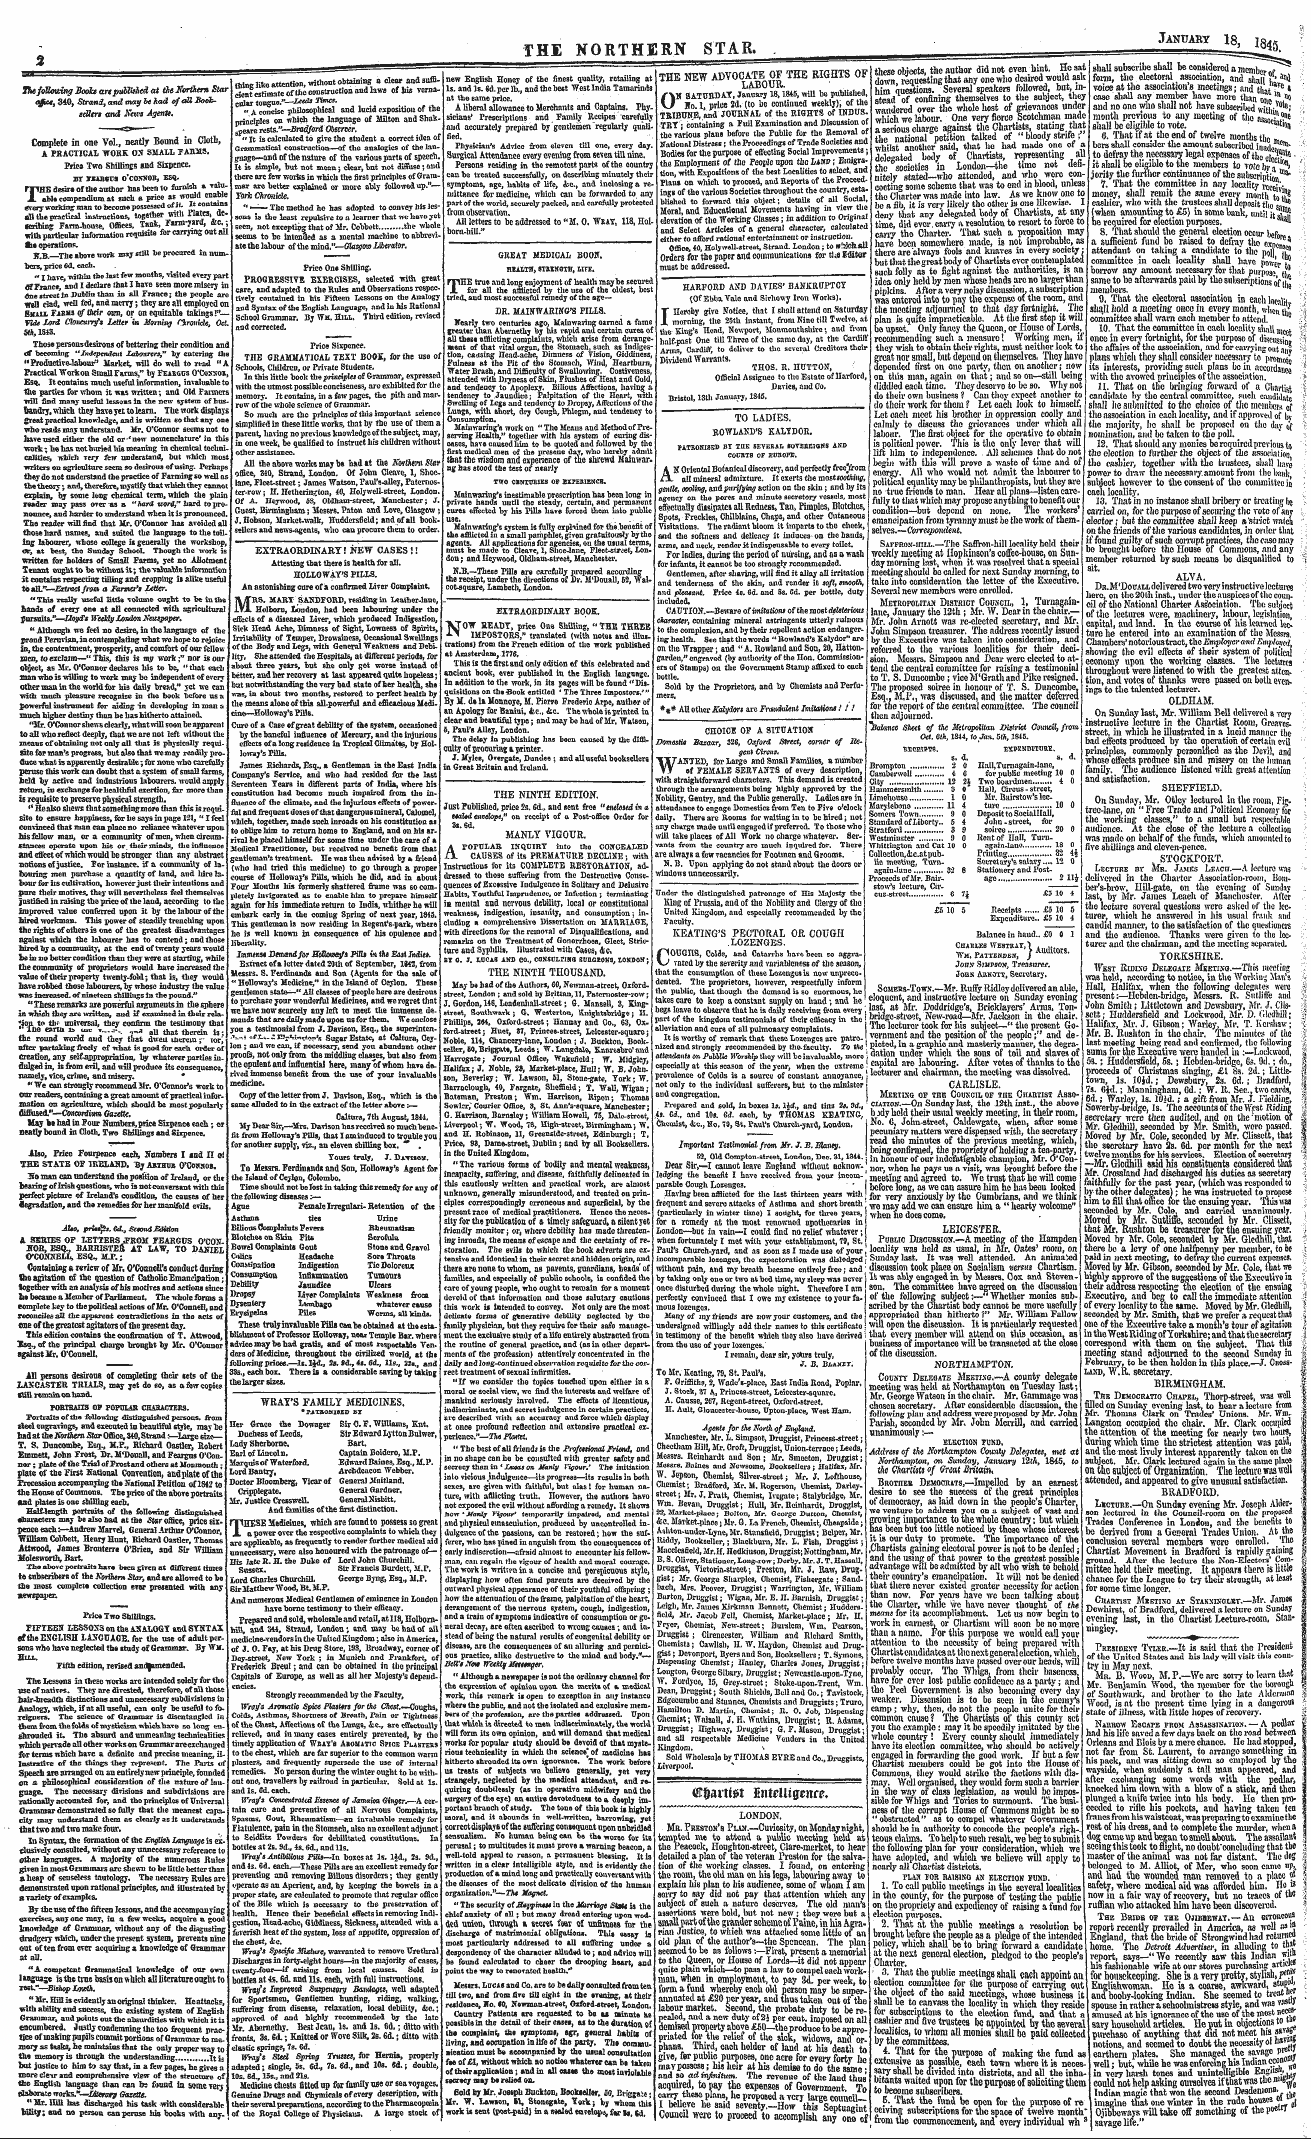 Northern Star (1837-1852): jS F Y, 4th edition - Ad00223